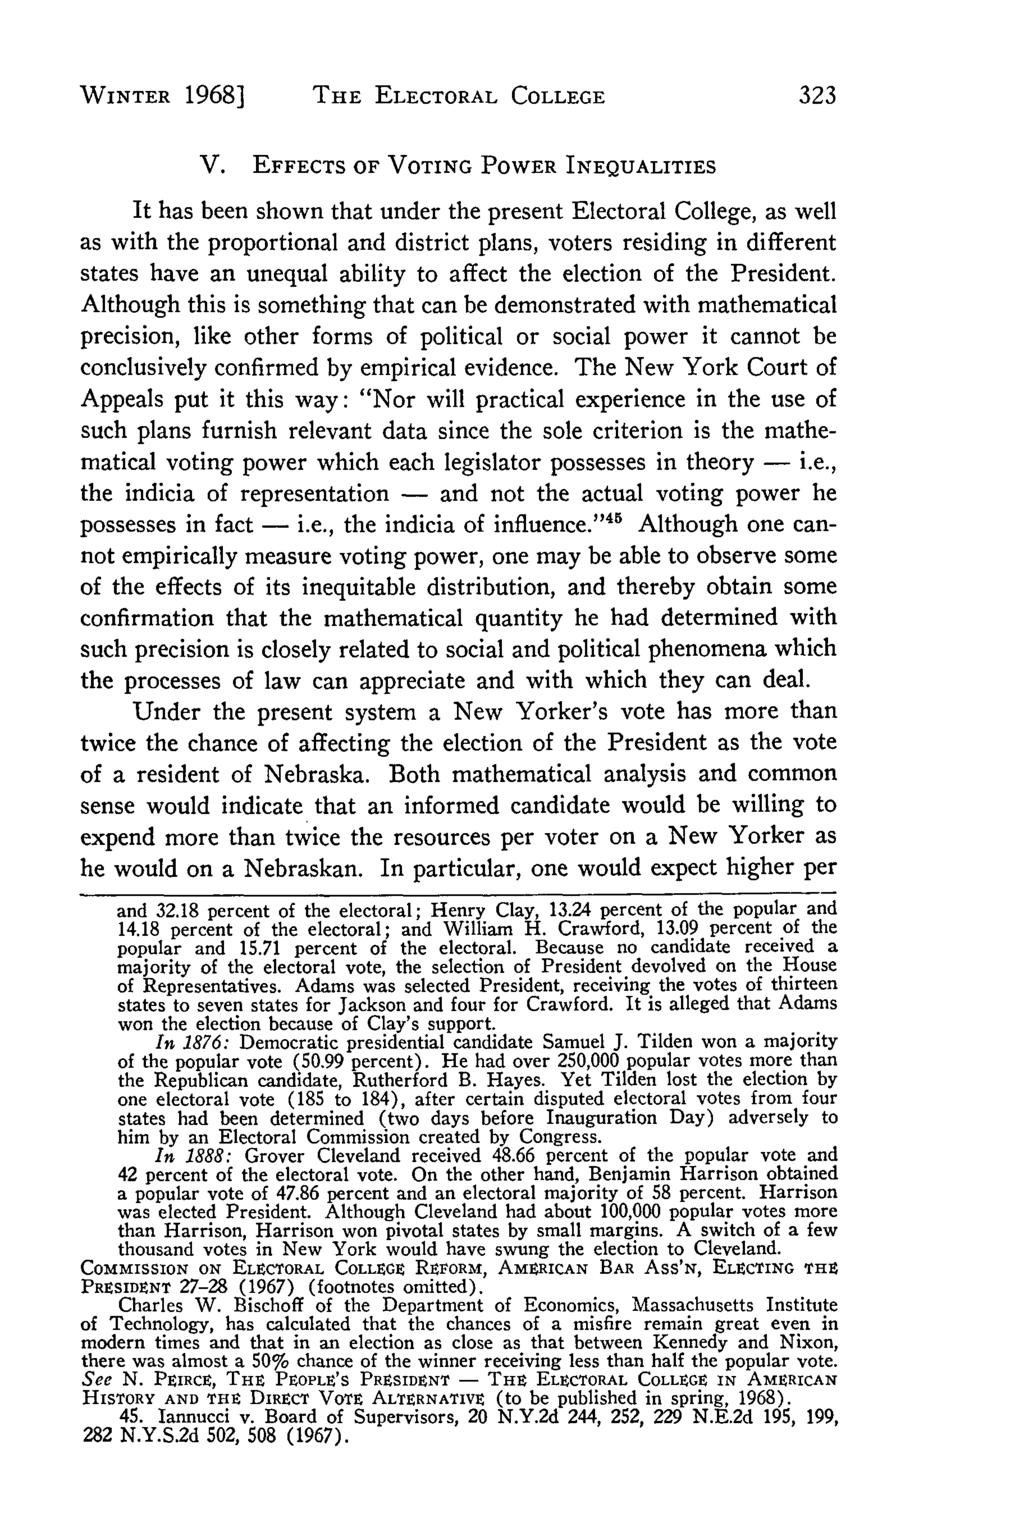 WINTER 1968] Villanova Law Review, Vol. 13, Iss. 2 [1968], Art. 3 THE ELECTORAL COLLEGE V.